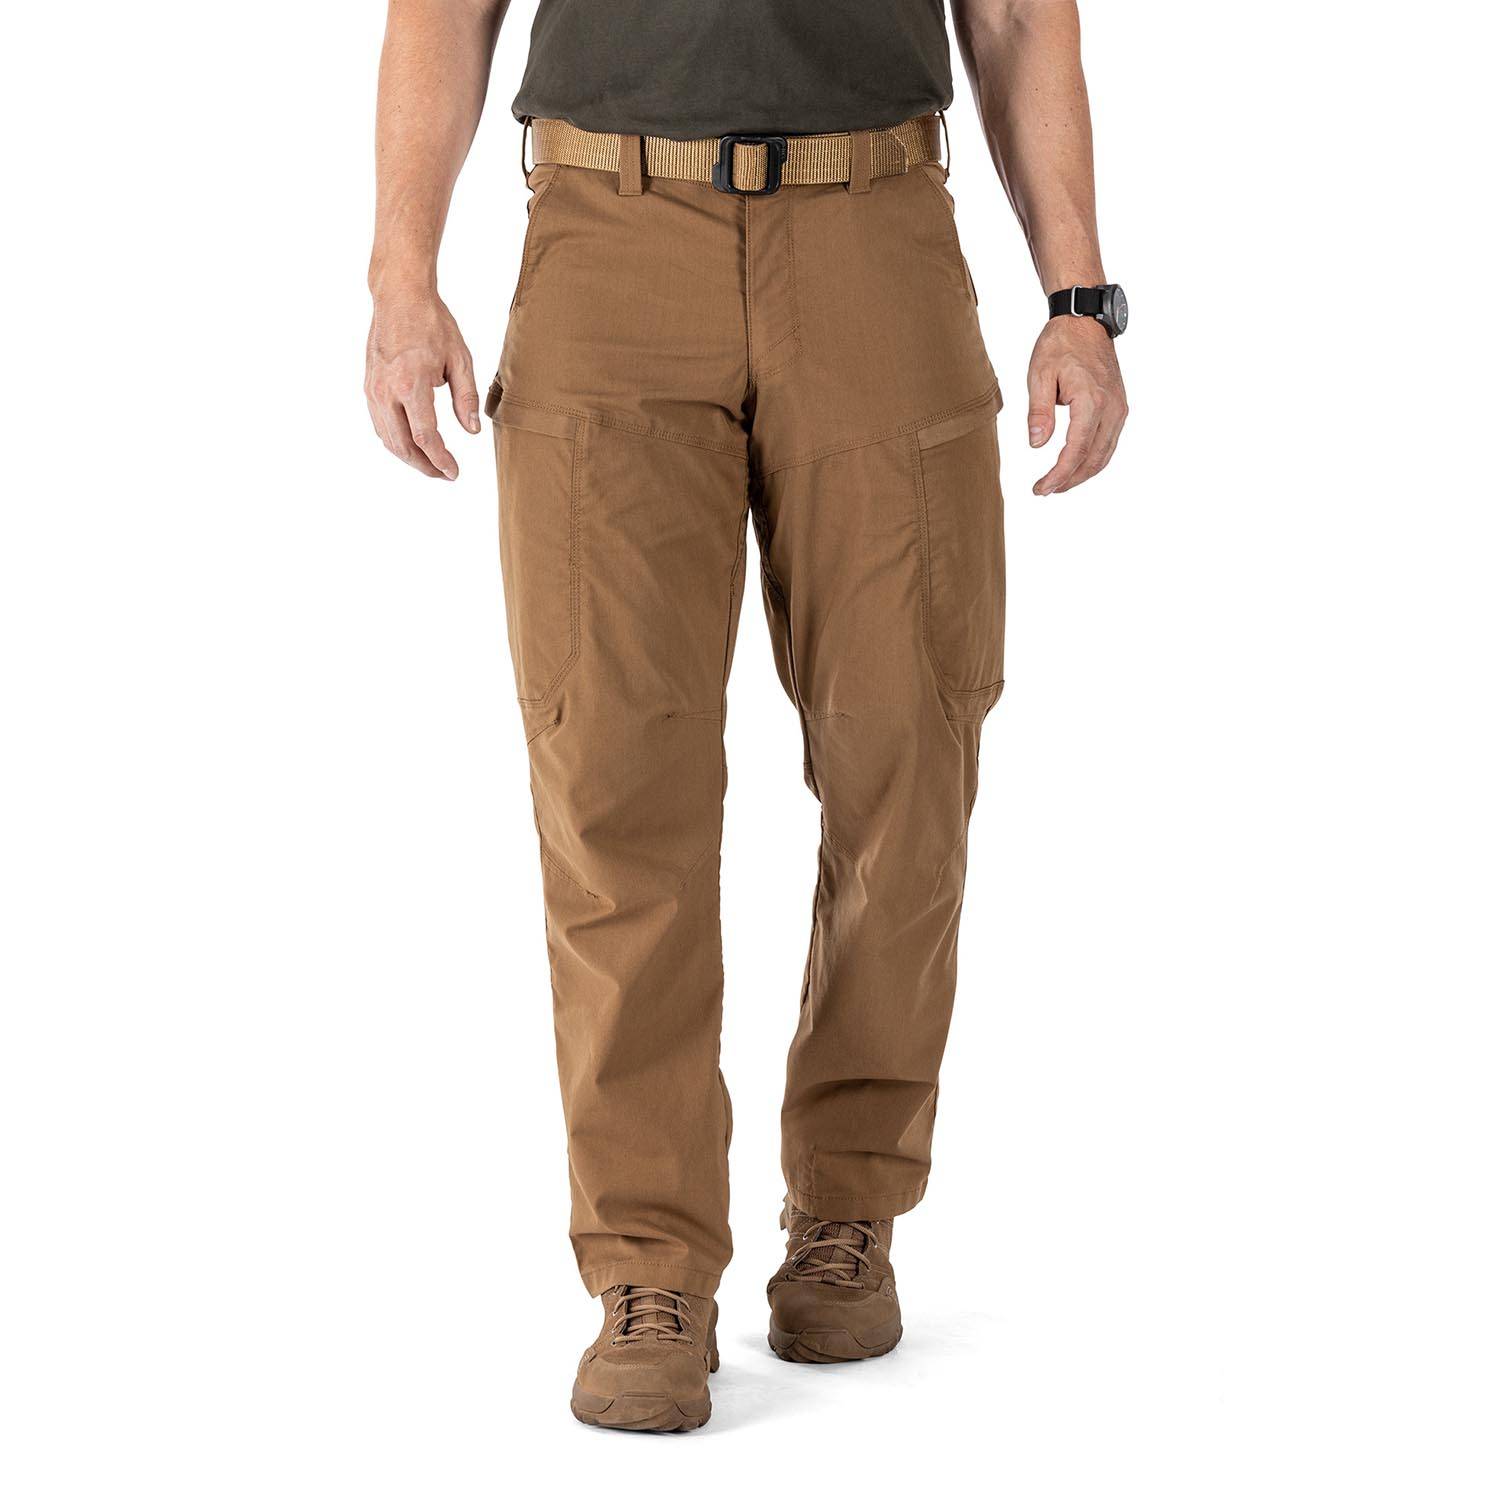 5.11 TACTICAL® APEX® PANT BURNT – Western Tactical Uniform and Gear